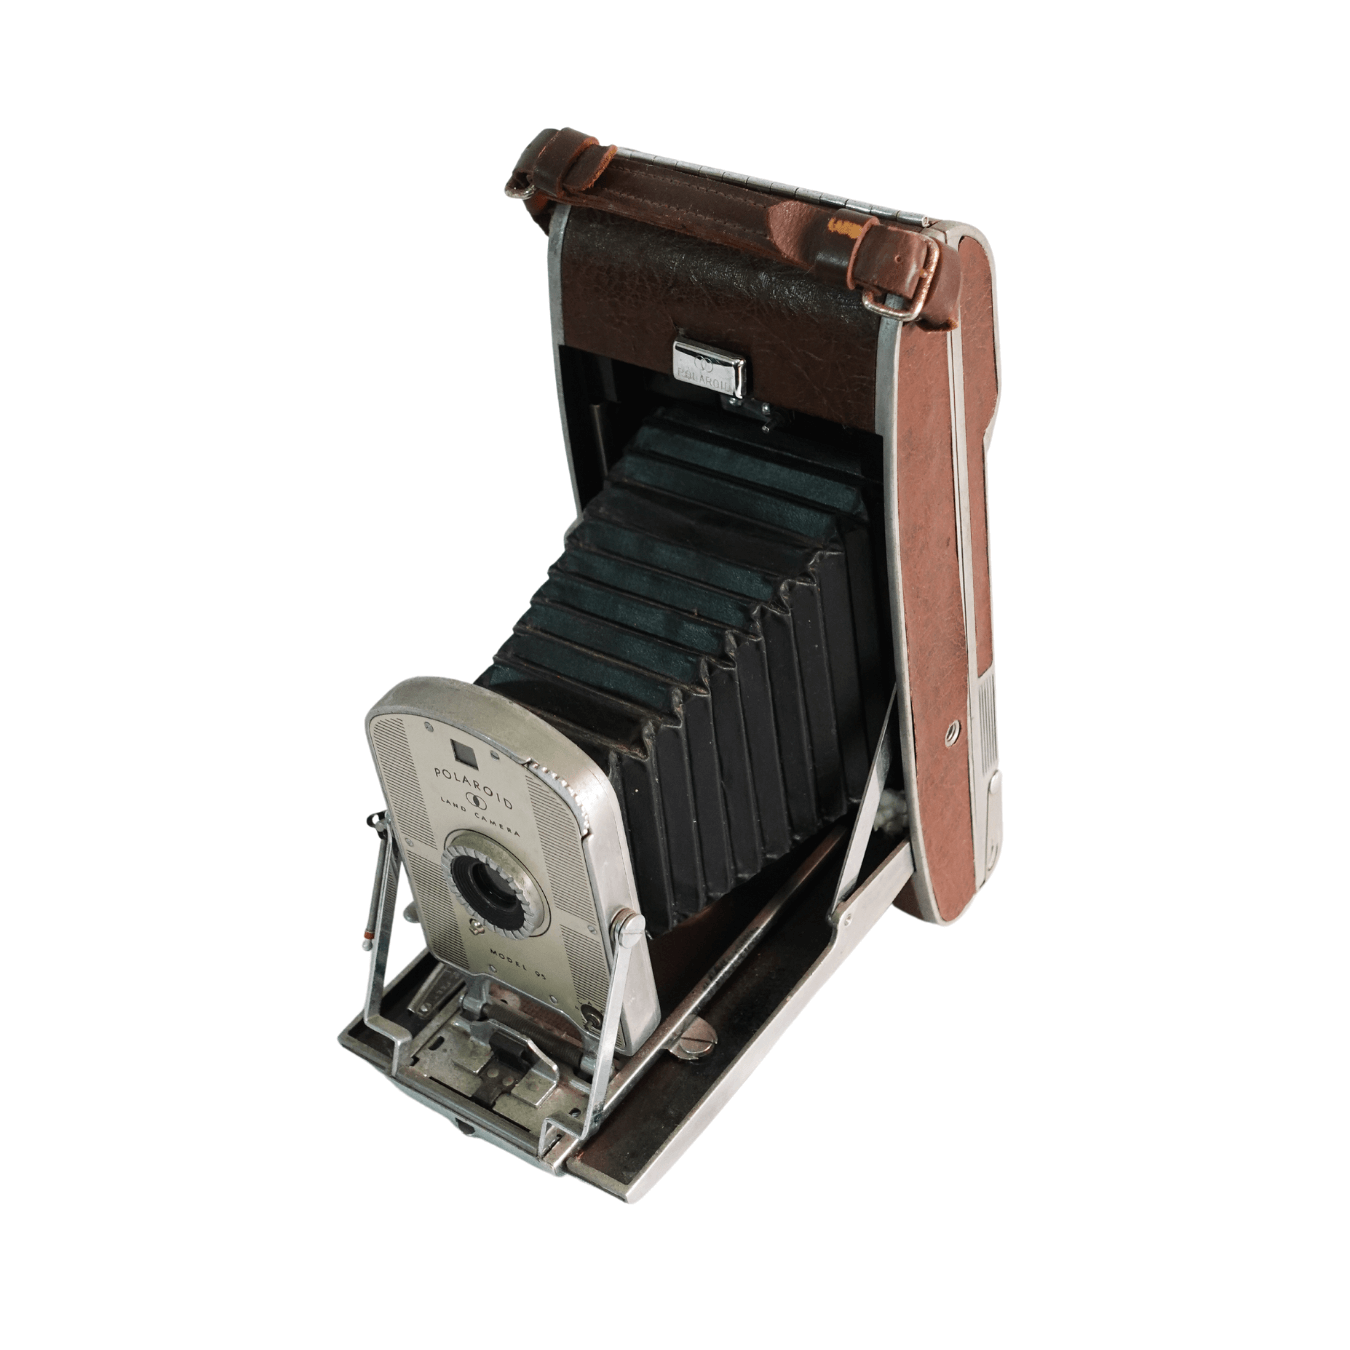 Câmera Polaroid Vintage Modelo 95 dos anos 1950